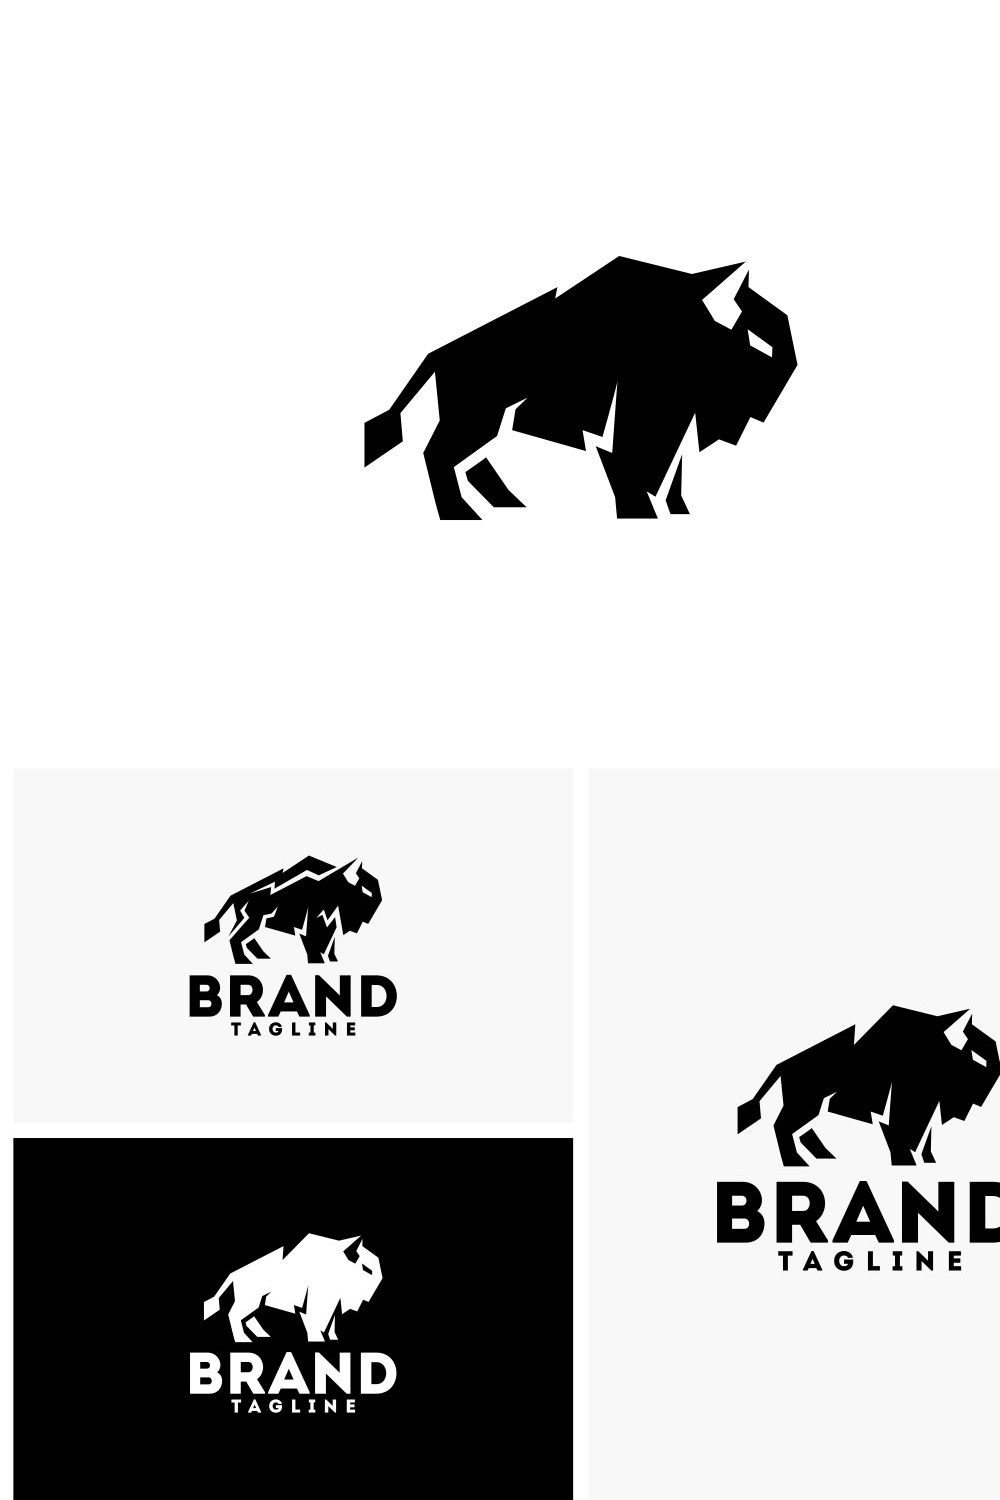 Buffalo Logo Template pinterest preview image.